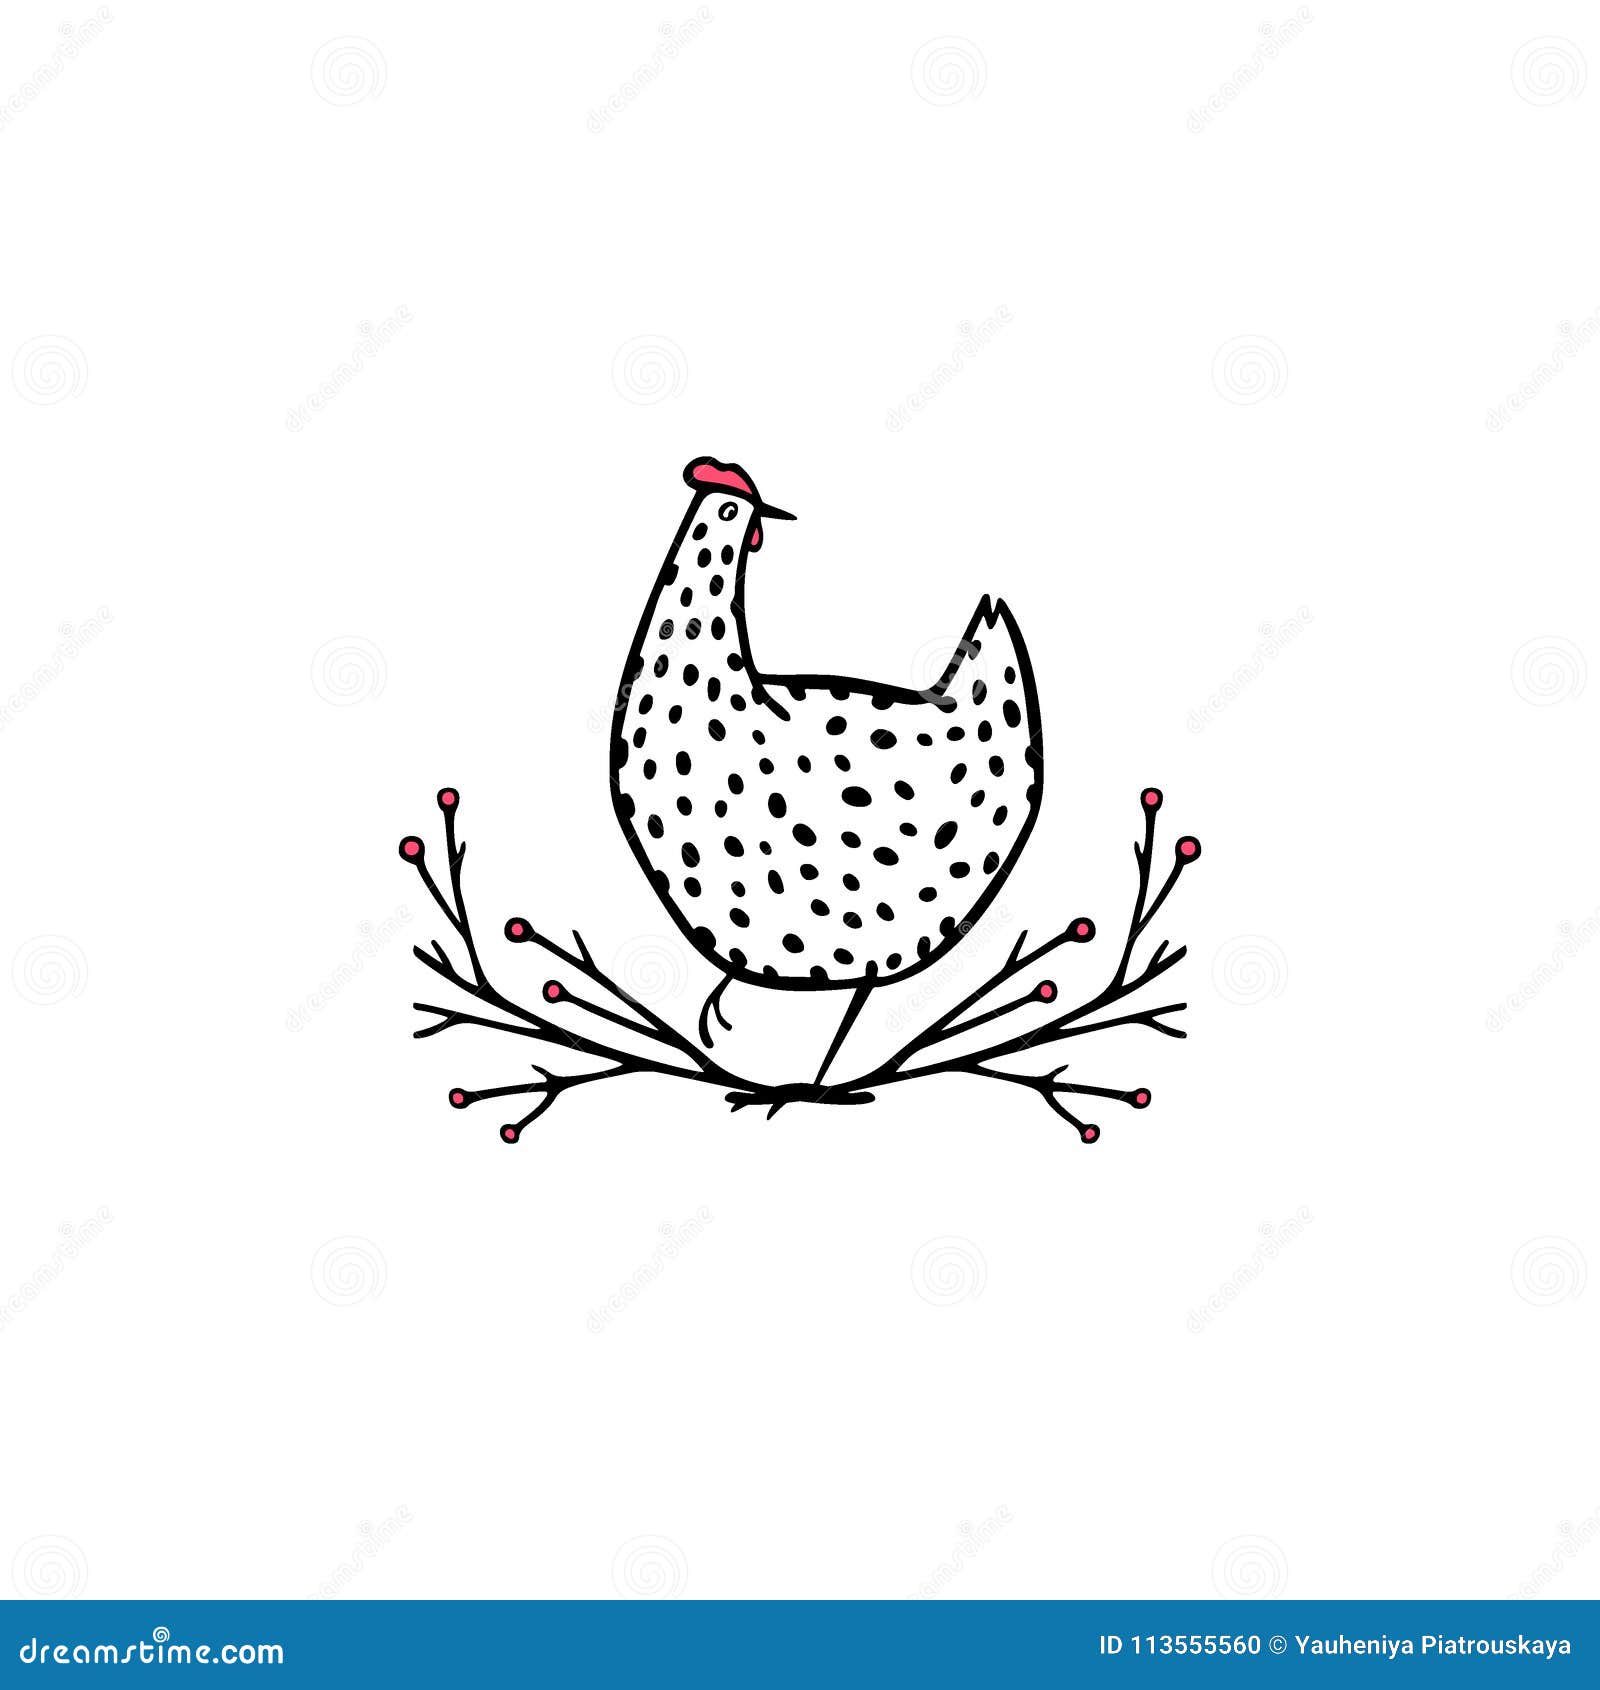 Hand drawn chicken emblem stock vector. Illustration of element - 113555560